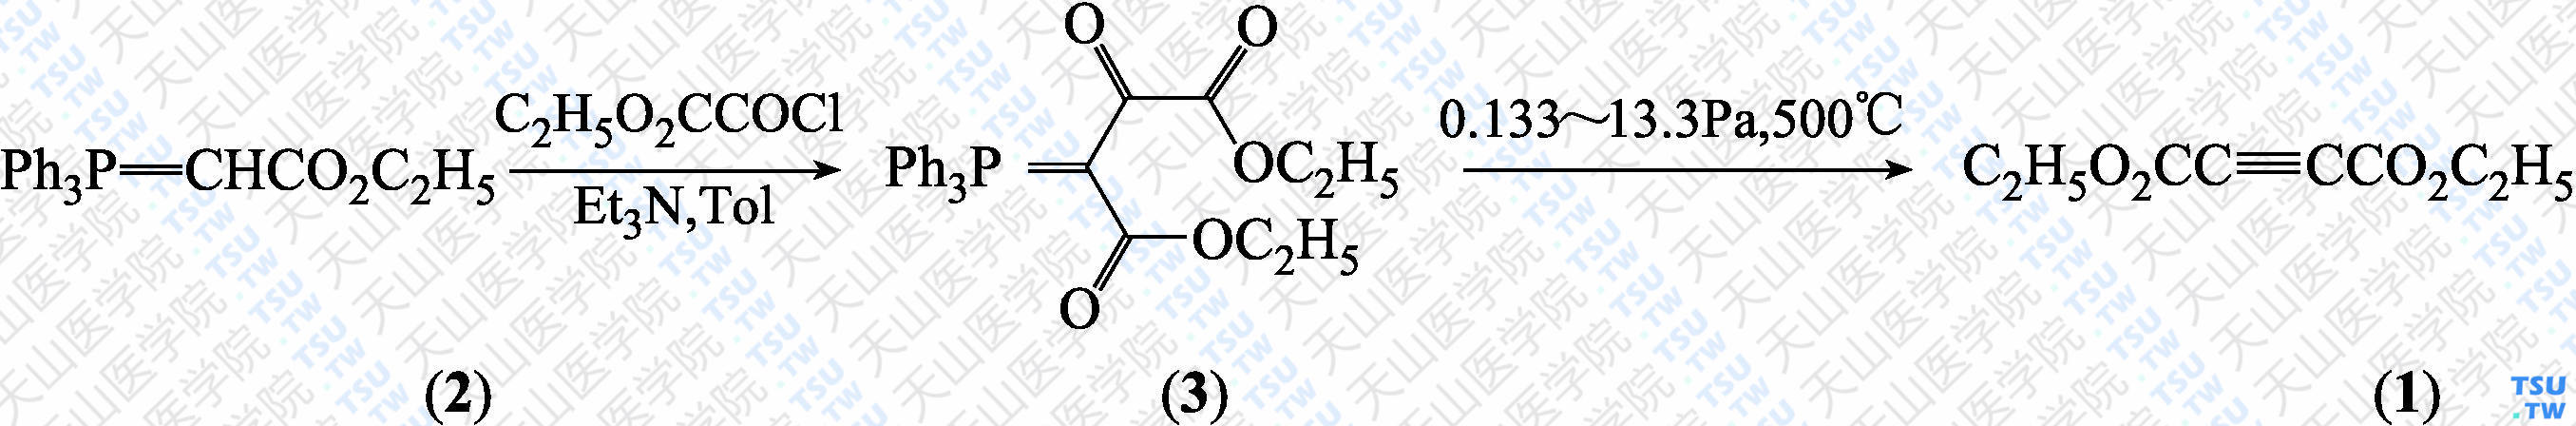 丁炔二酸二乙酯（分子式：C<sub>8</sub>H<sub>10</sub>O<sub>4</sub>）的合成方法路线及其结构式